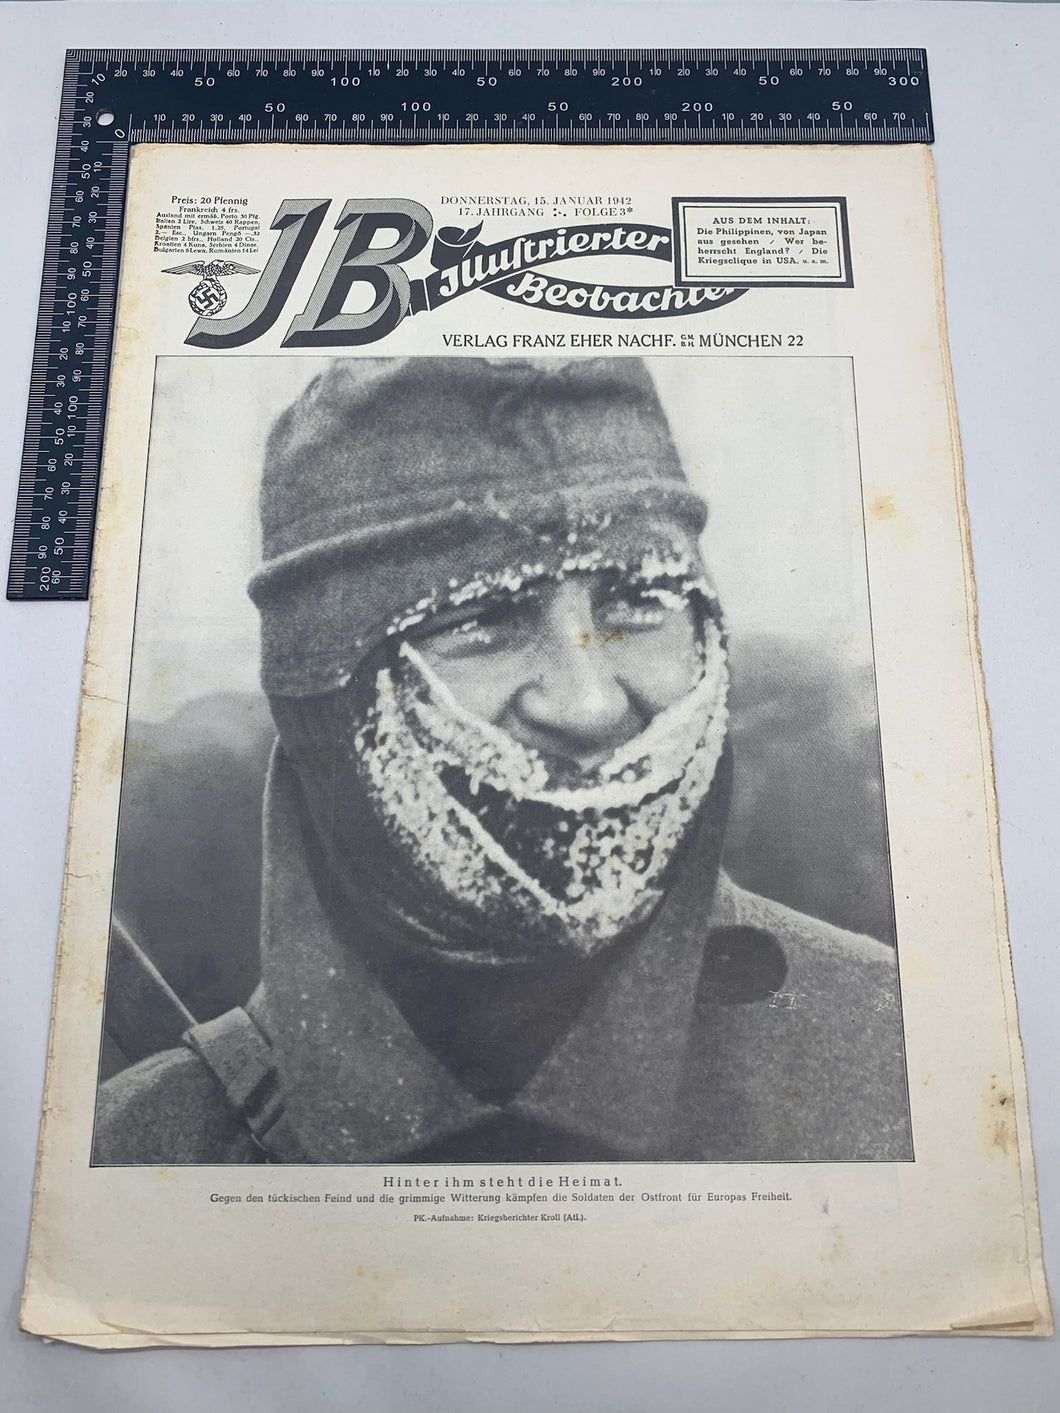 JB Juustrierter Beobachter NSDAP Magazine Original WW2 German - 15th January 1942